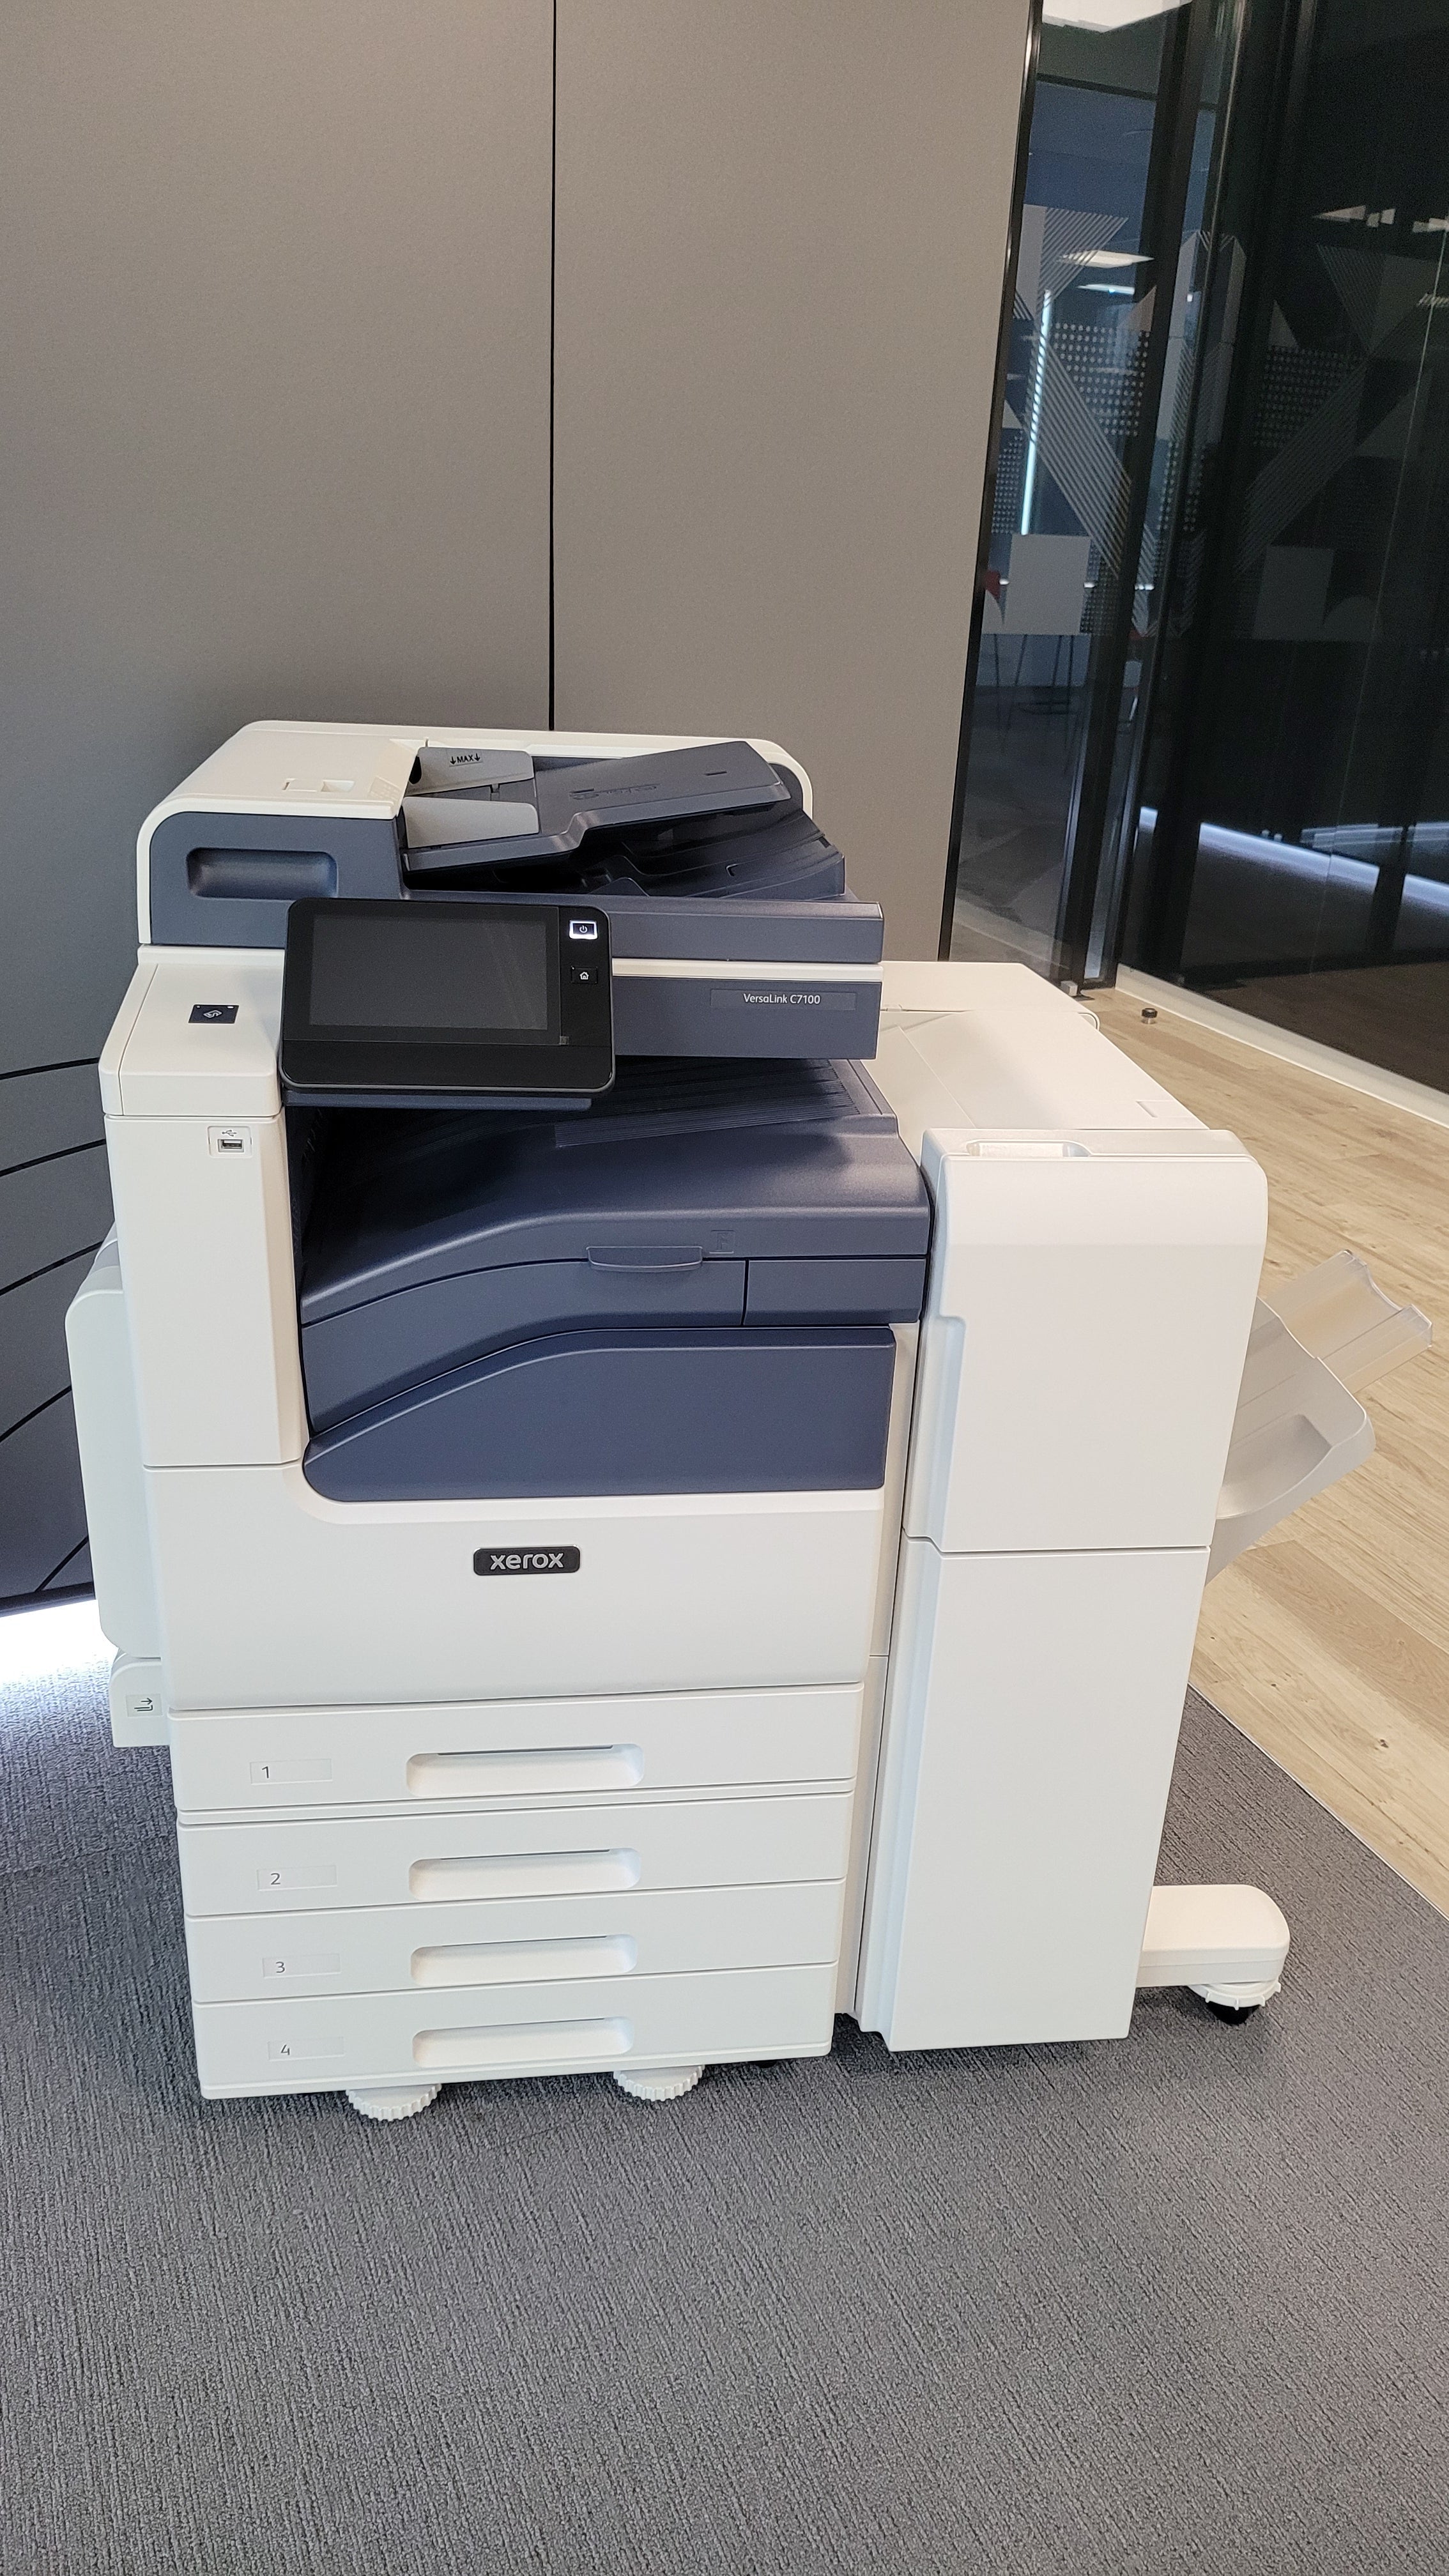 Xerox VersaLink C7130 Colour MultiFunction Printer - Two trays